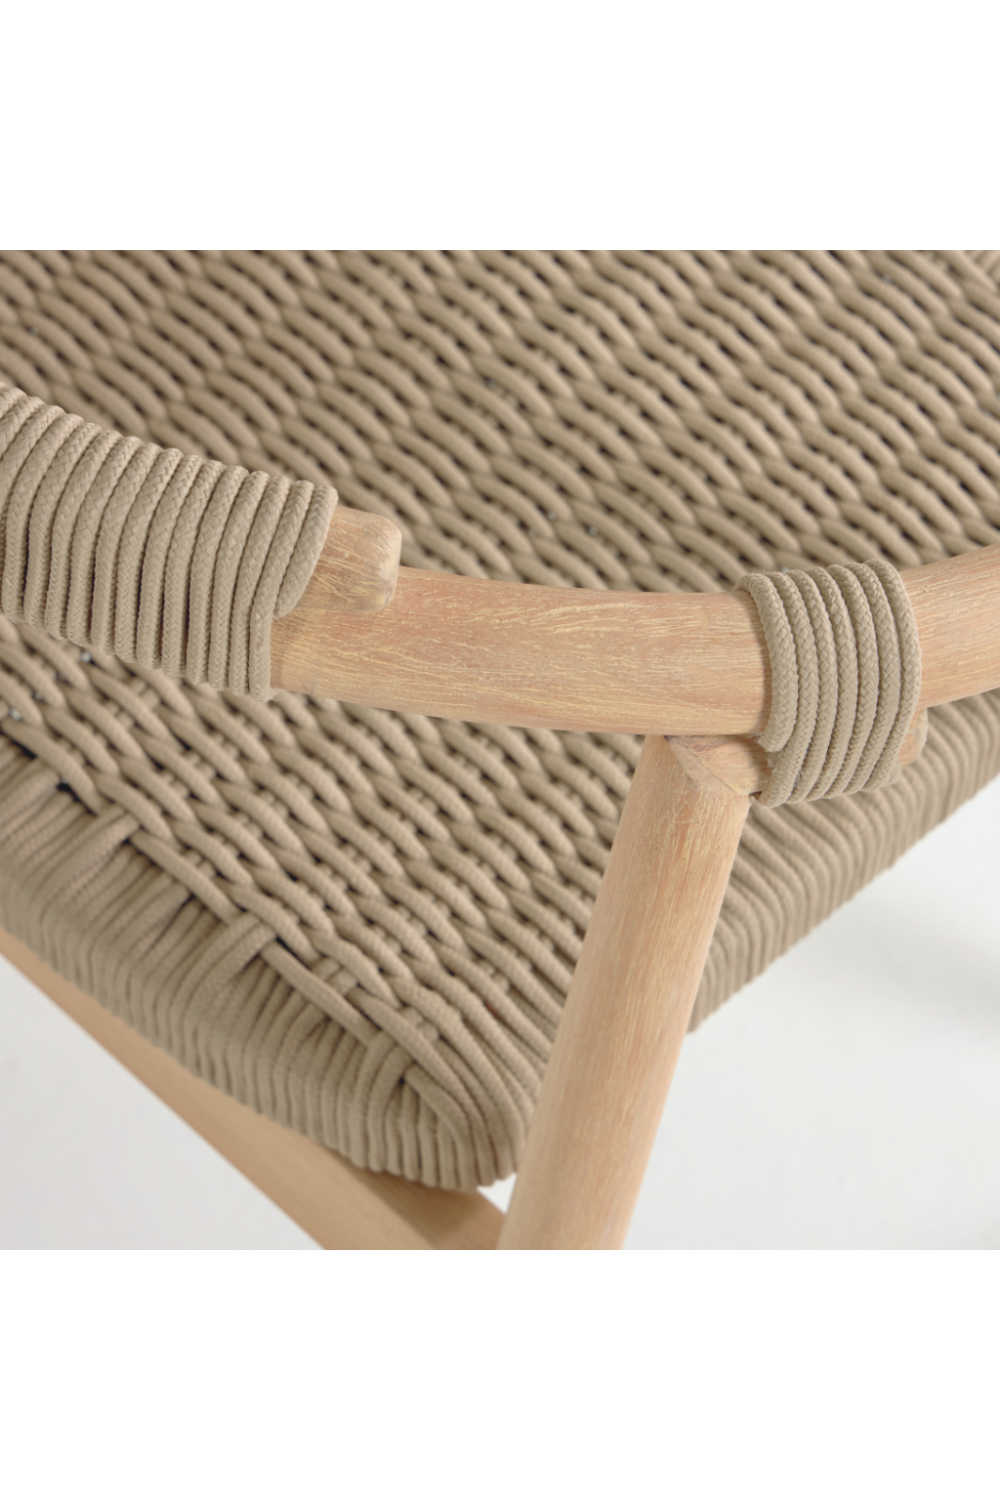 Beige Woven Outdoor Chairs (2) | La Forma Majela | OROA.com